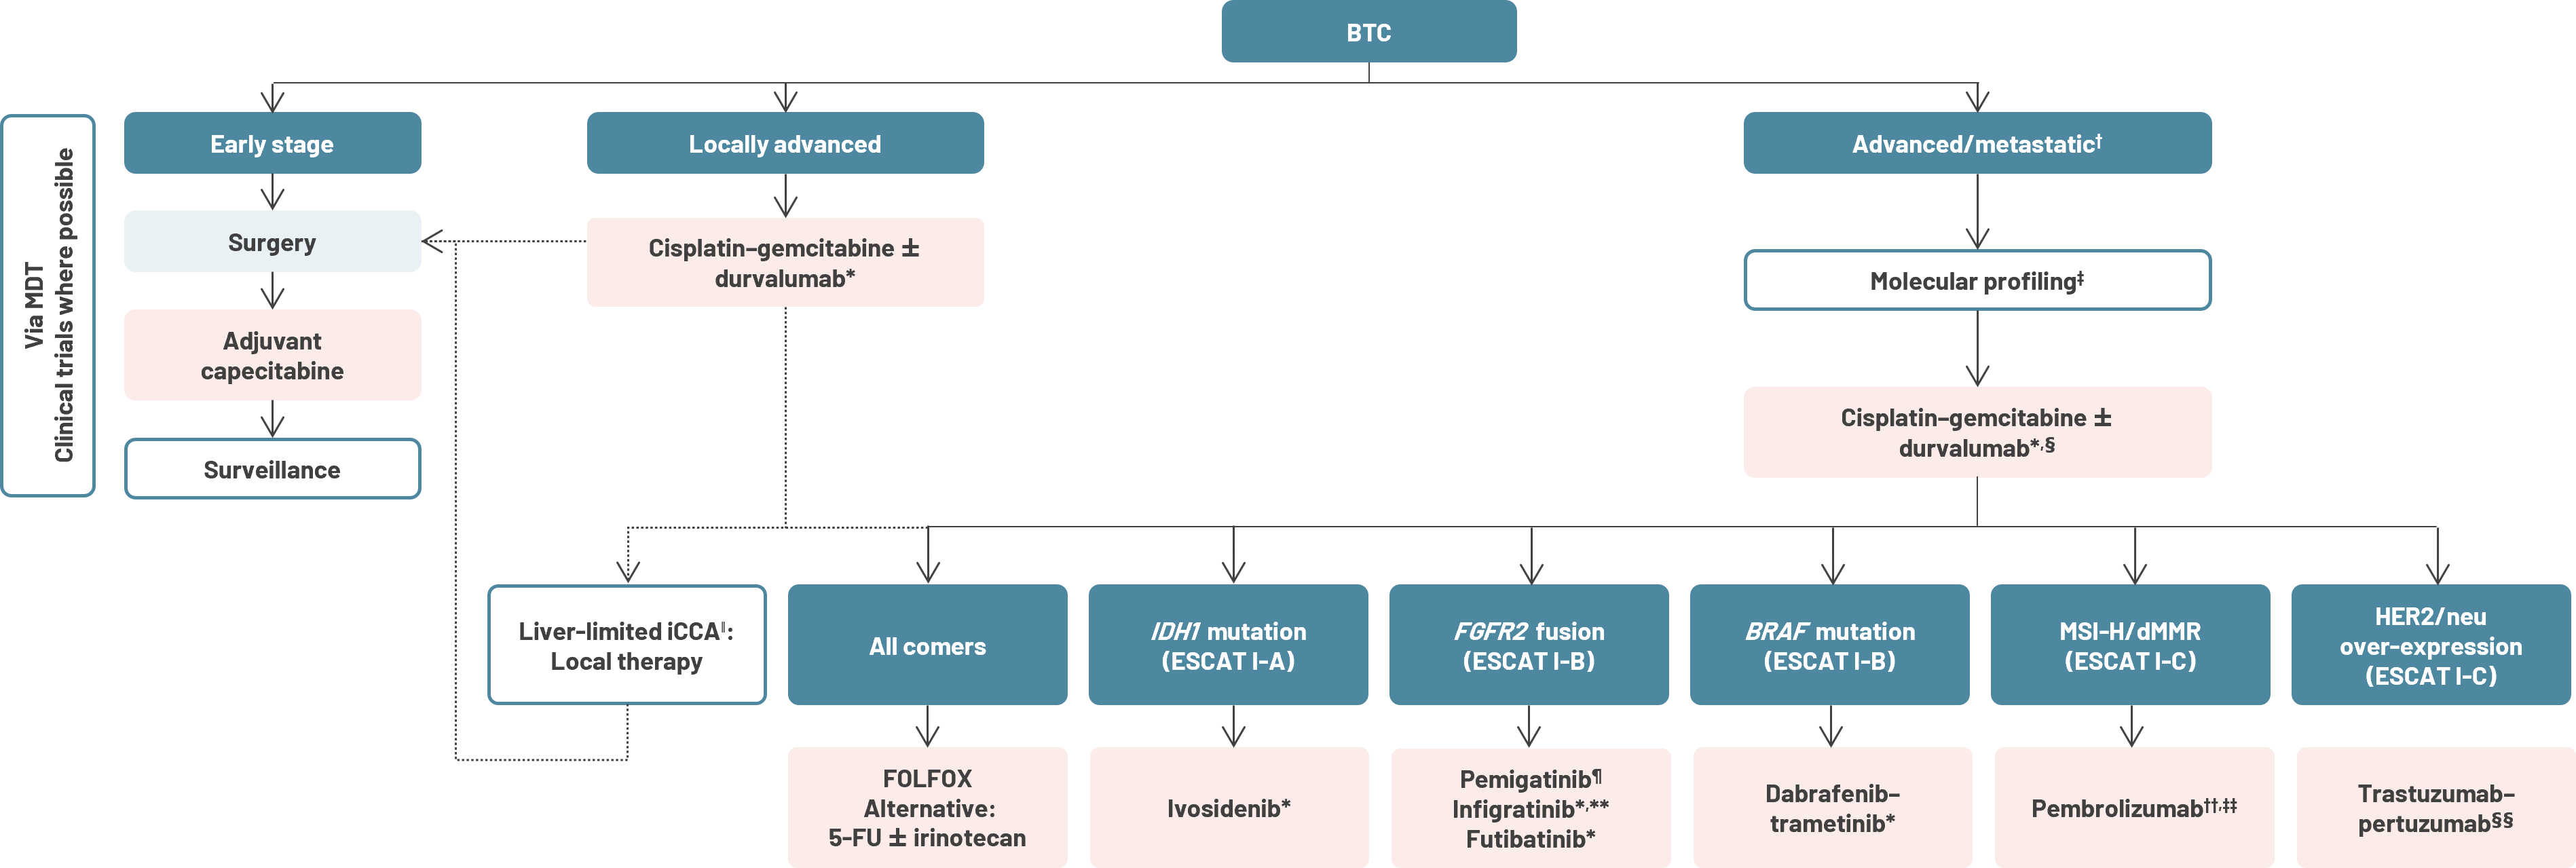 A chart showing the treatment algorithm